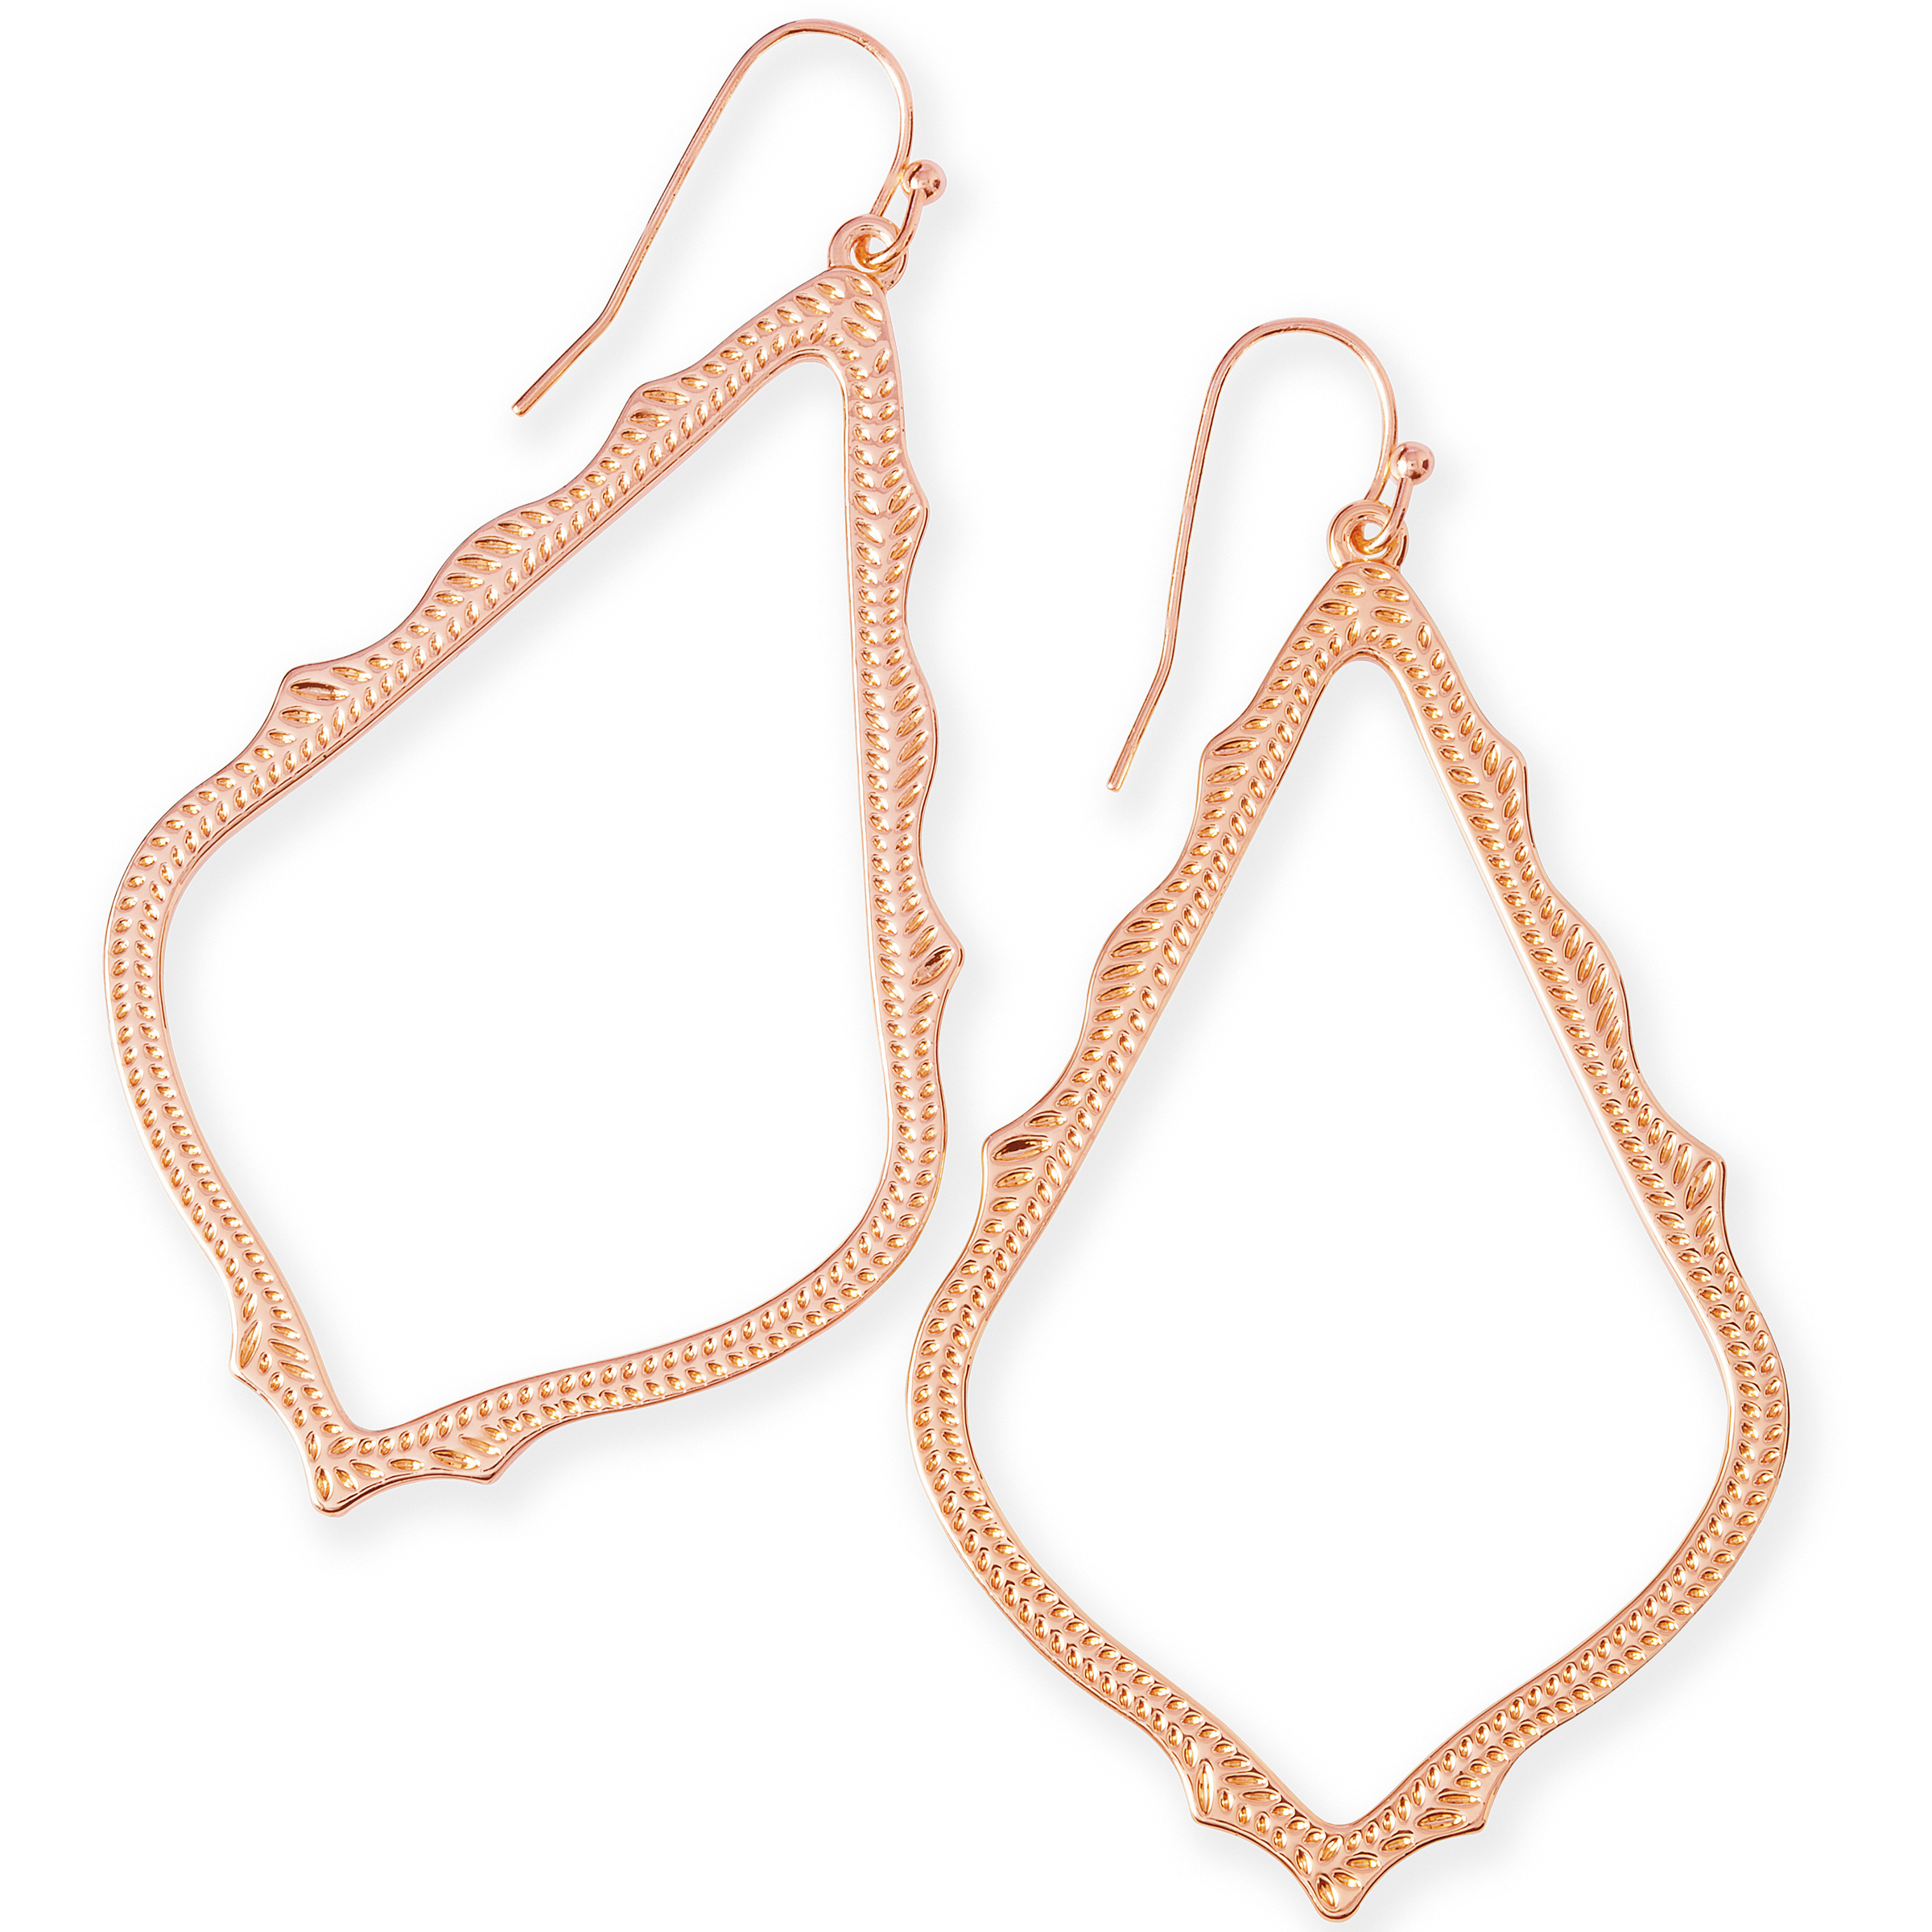 Kendra Scott | Sophee Drop Earrings in Rose Gold - Giddy Up Glamour Boutique